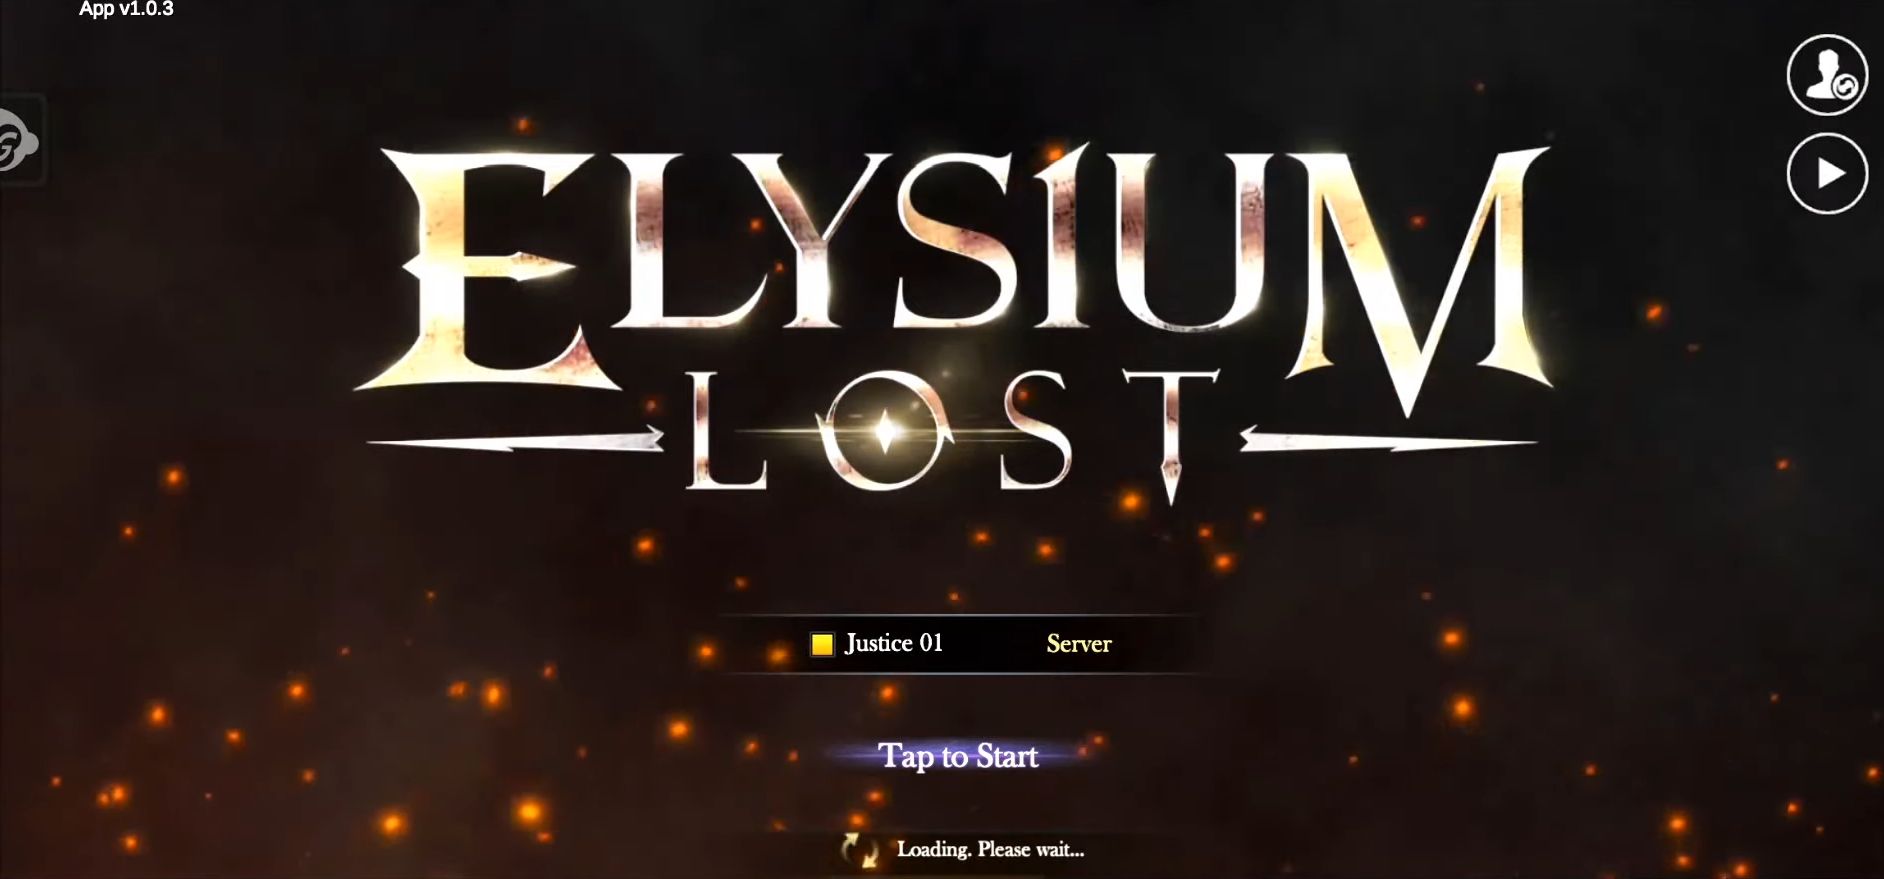 Download Elysium Lost für Android kostenlos.